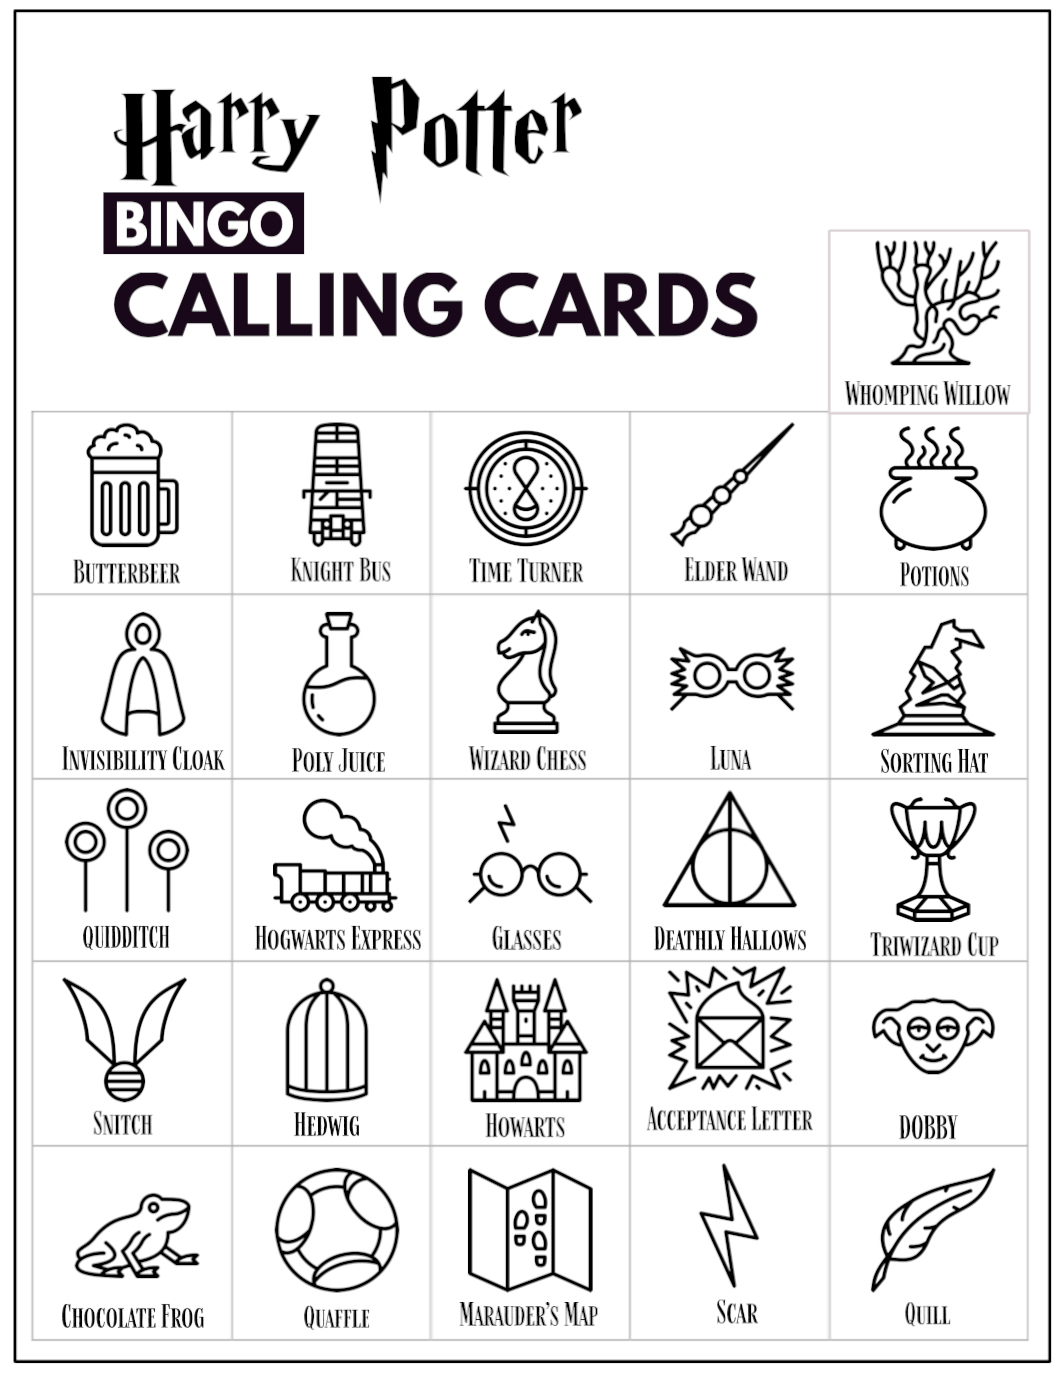 free-printable-harry-potter-bingo-game-paper-trail-design